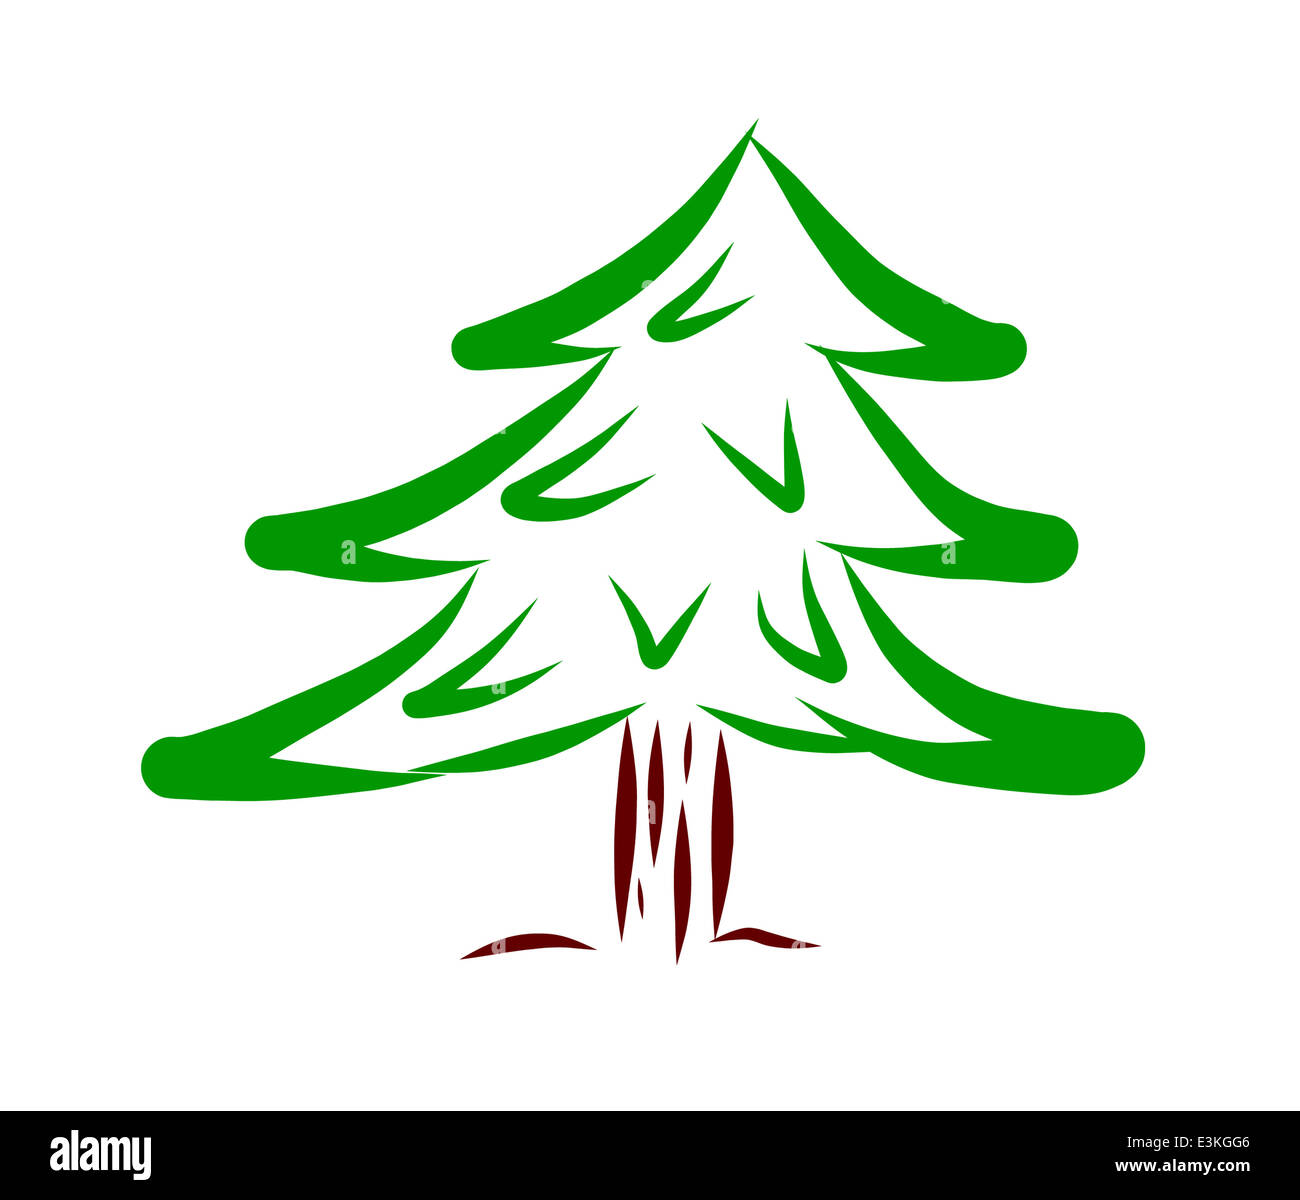 Illustration of a fir tree Stock Photo